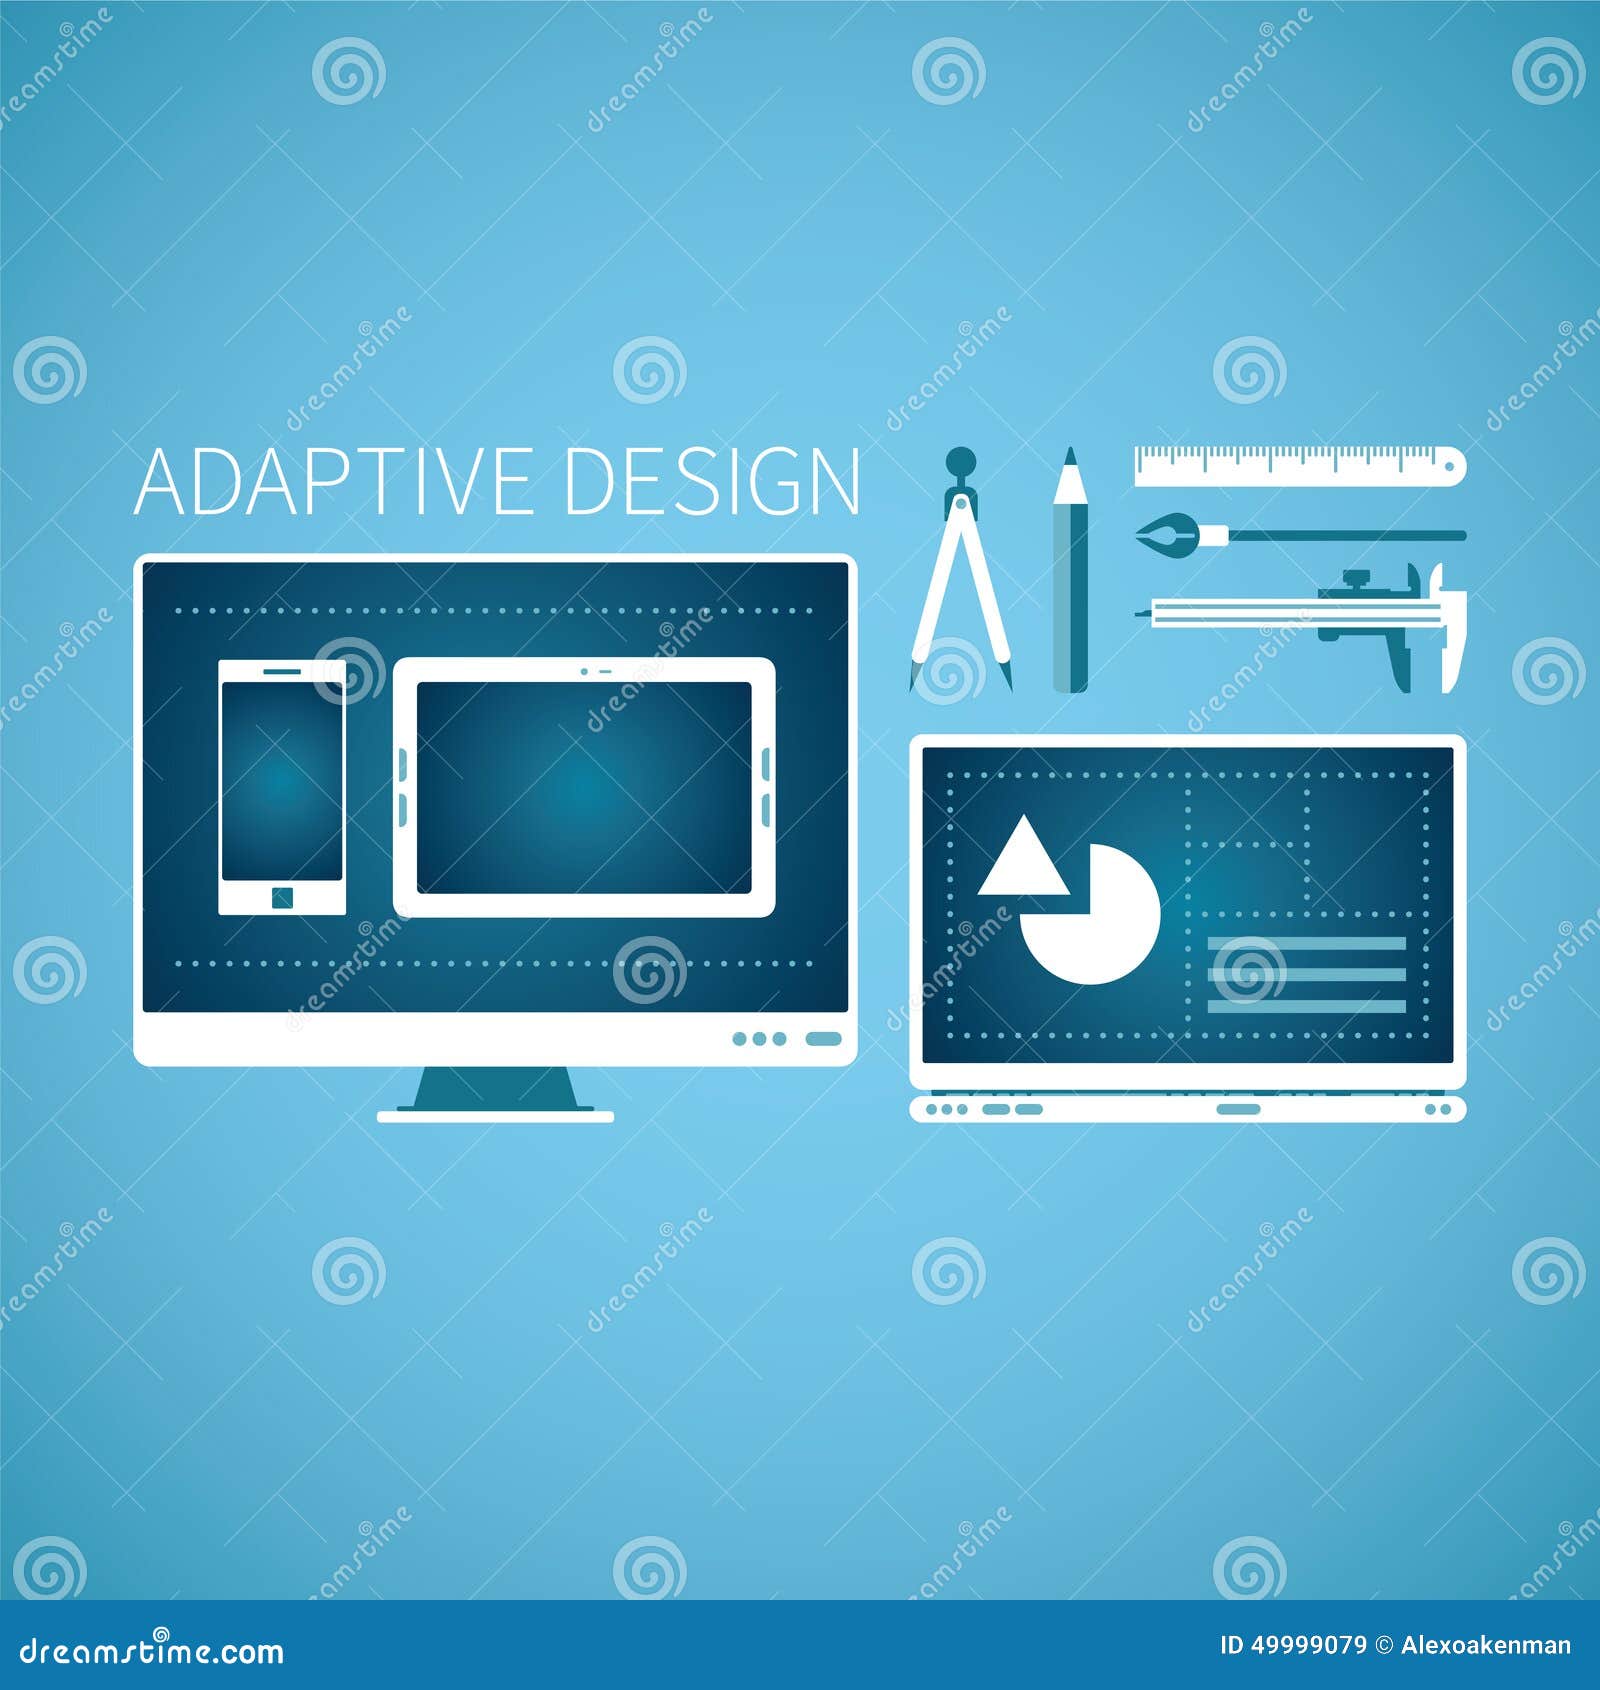 adaptive web graphic  development  concept in flat style